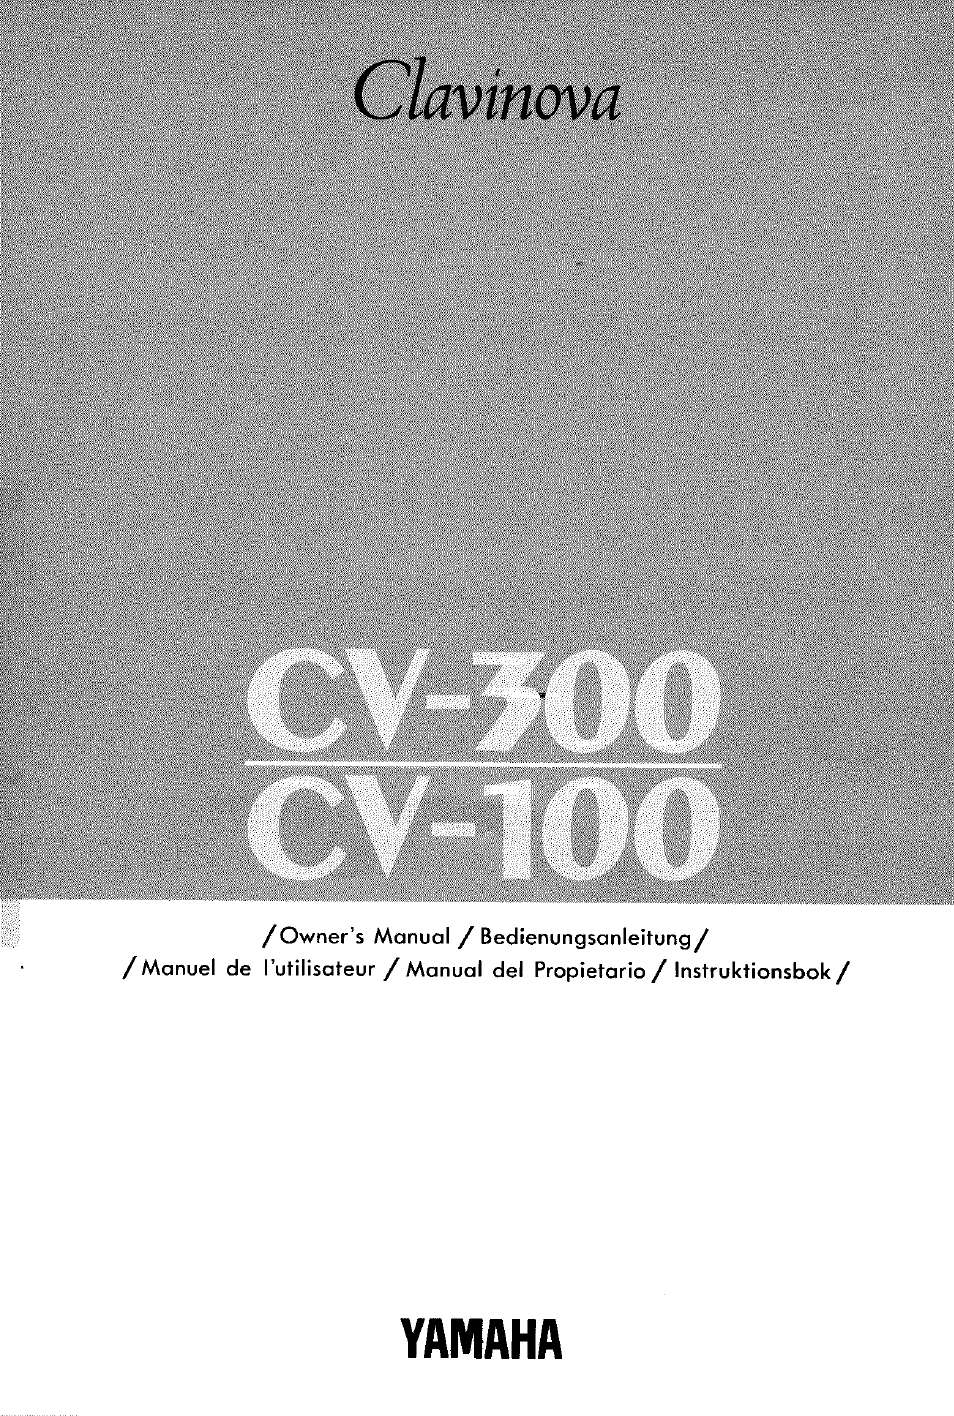 Clavinova CV-300